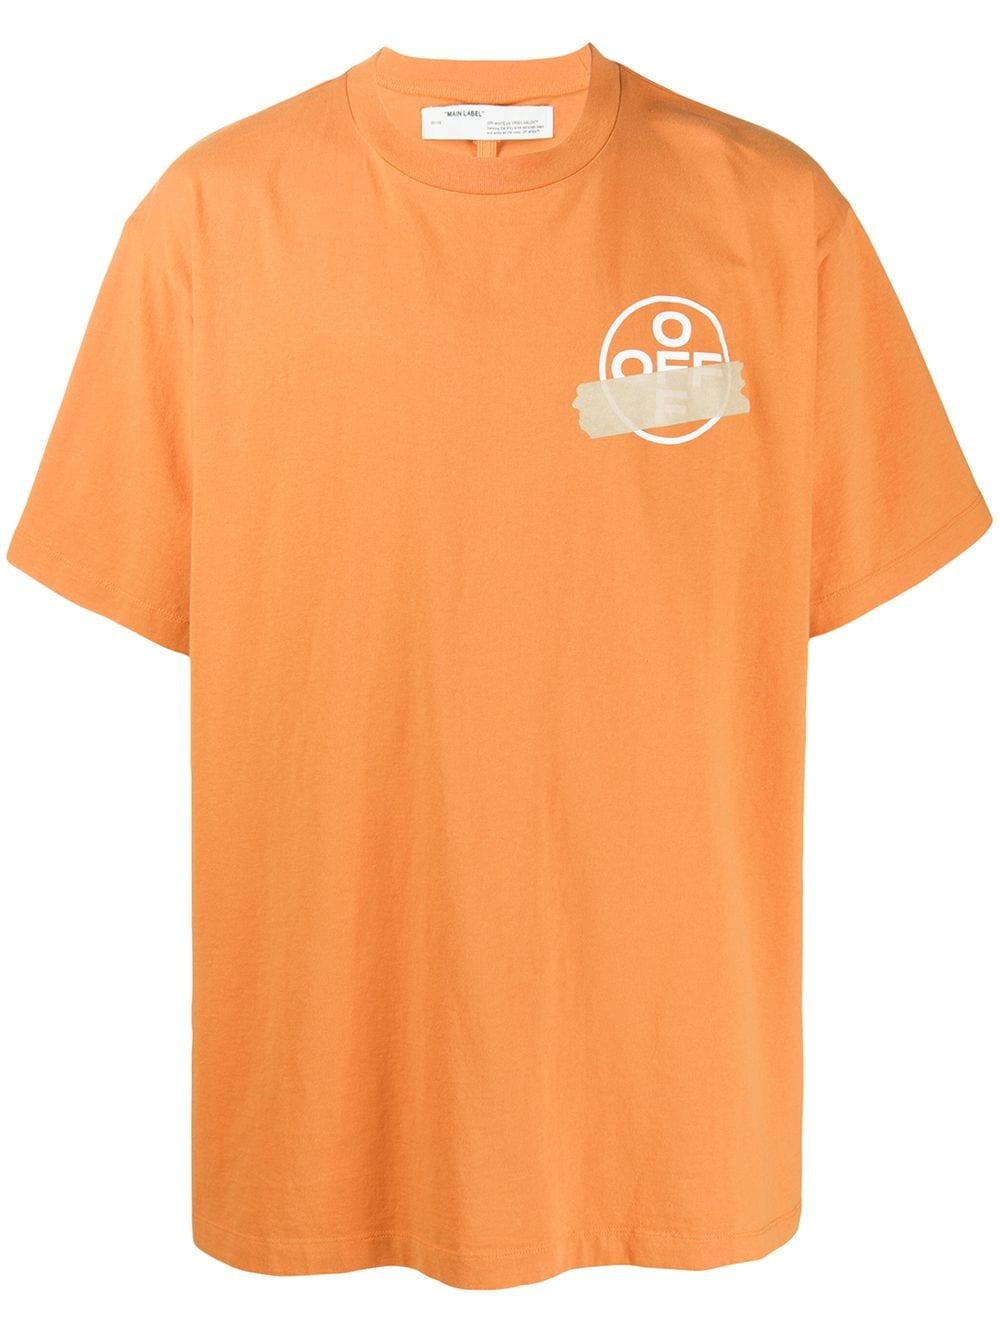 Off-White c/o Virgil Abloh Cotton Tape Arrows Print T-shirt in Orange ...